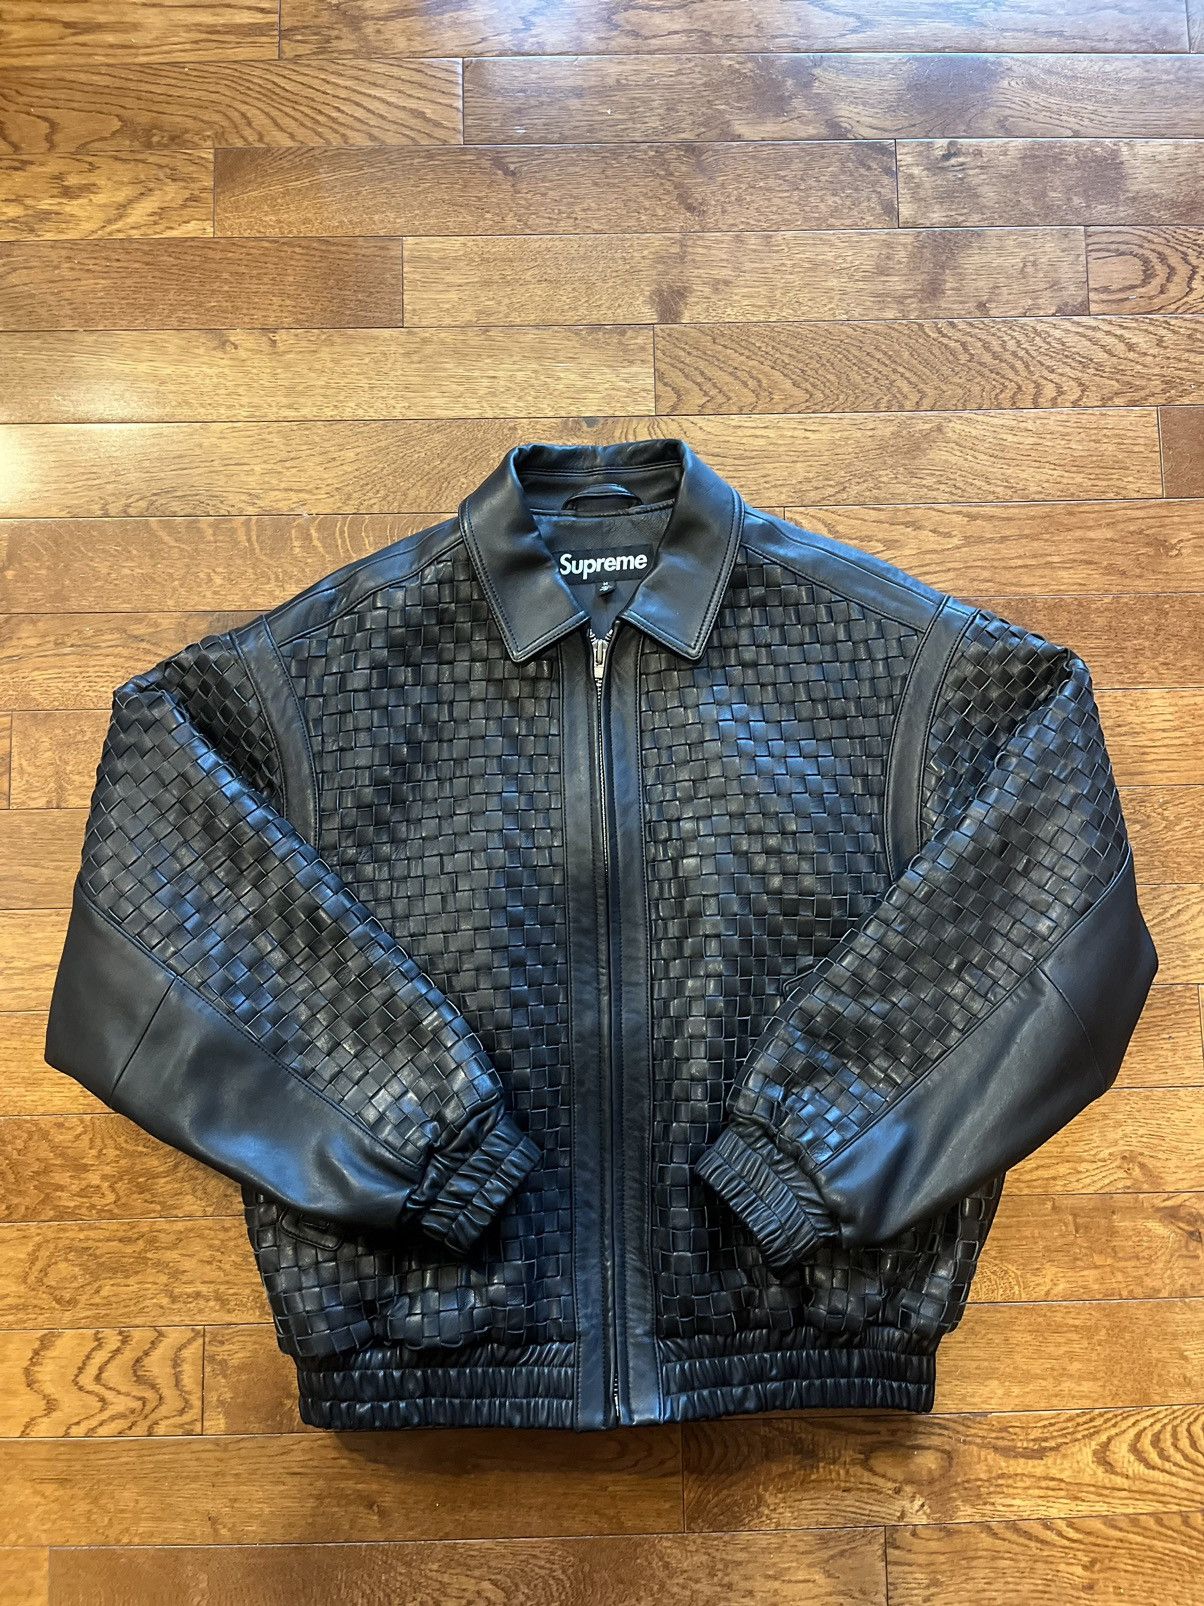 Supreme Supreme Woven Leather Varsity | Grailed